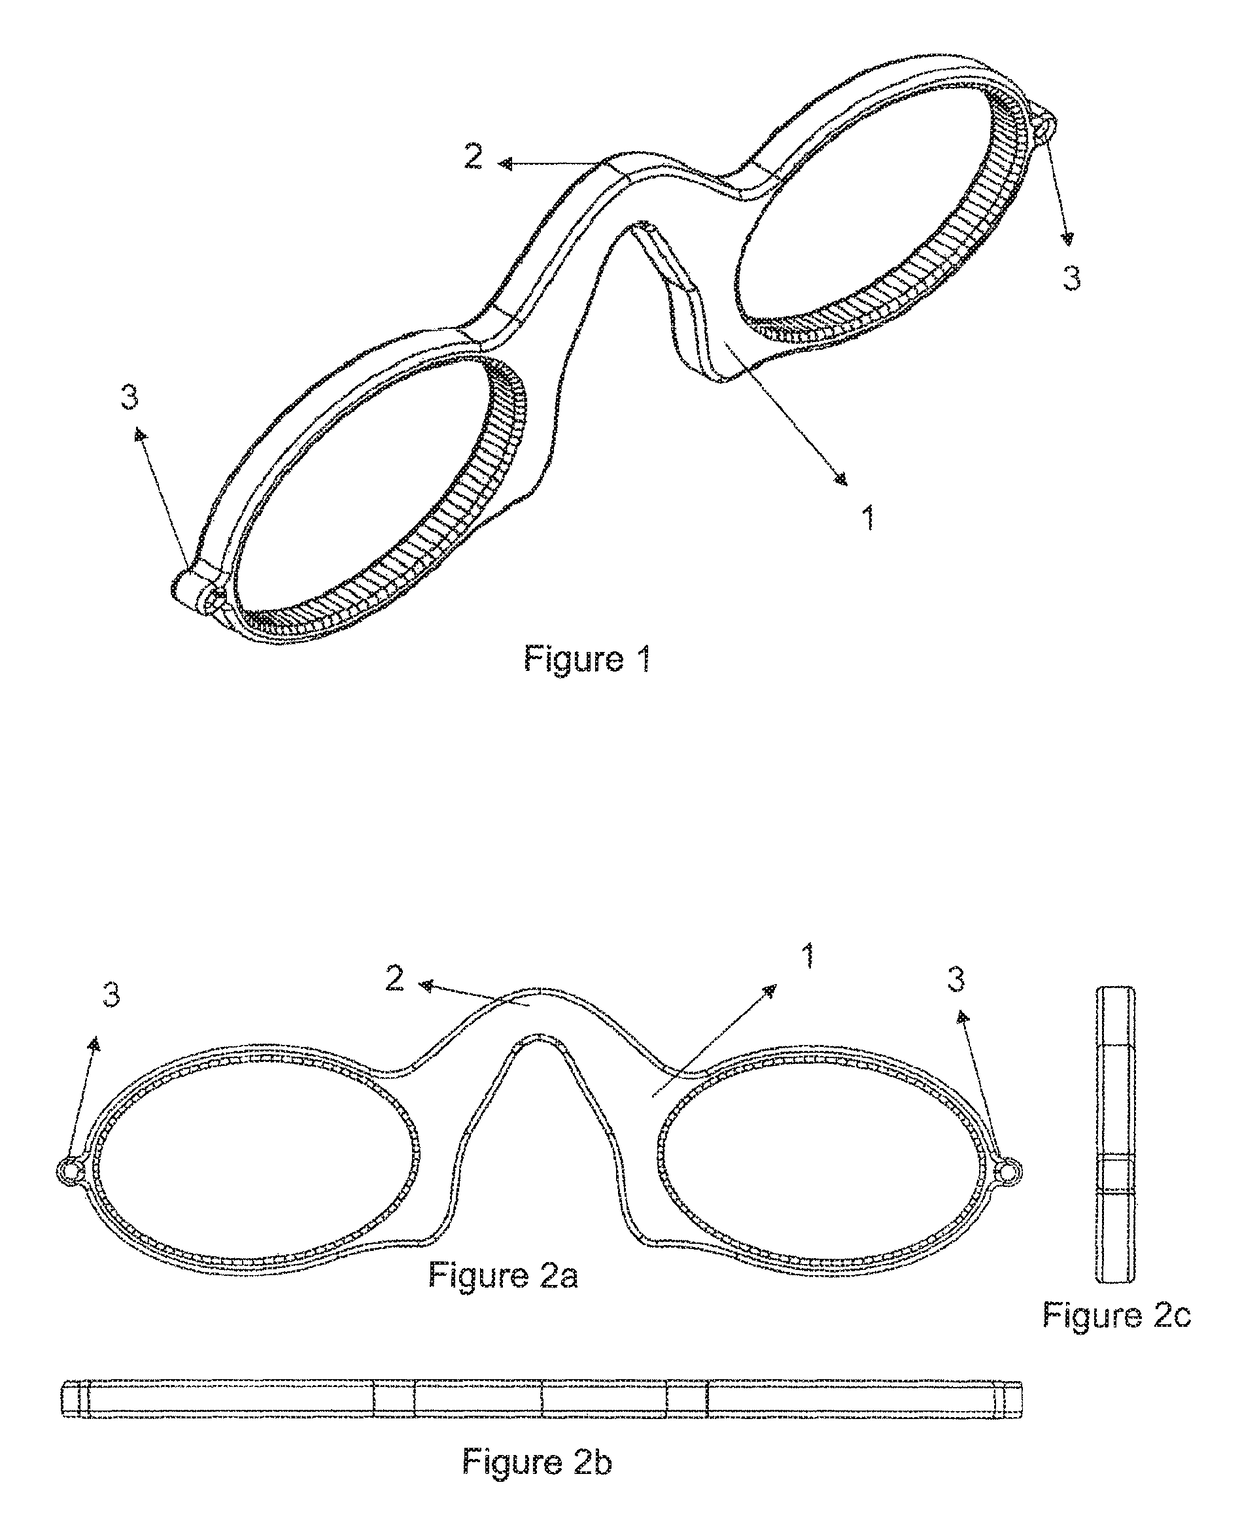 Flexible, silicone eyeglass frame without legs